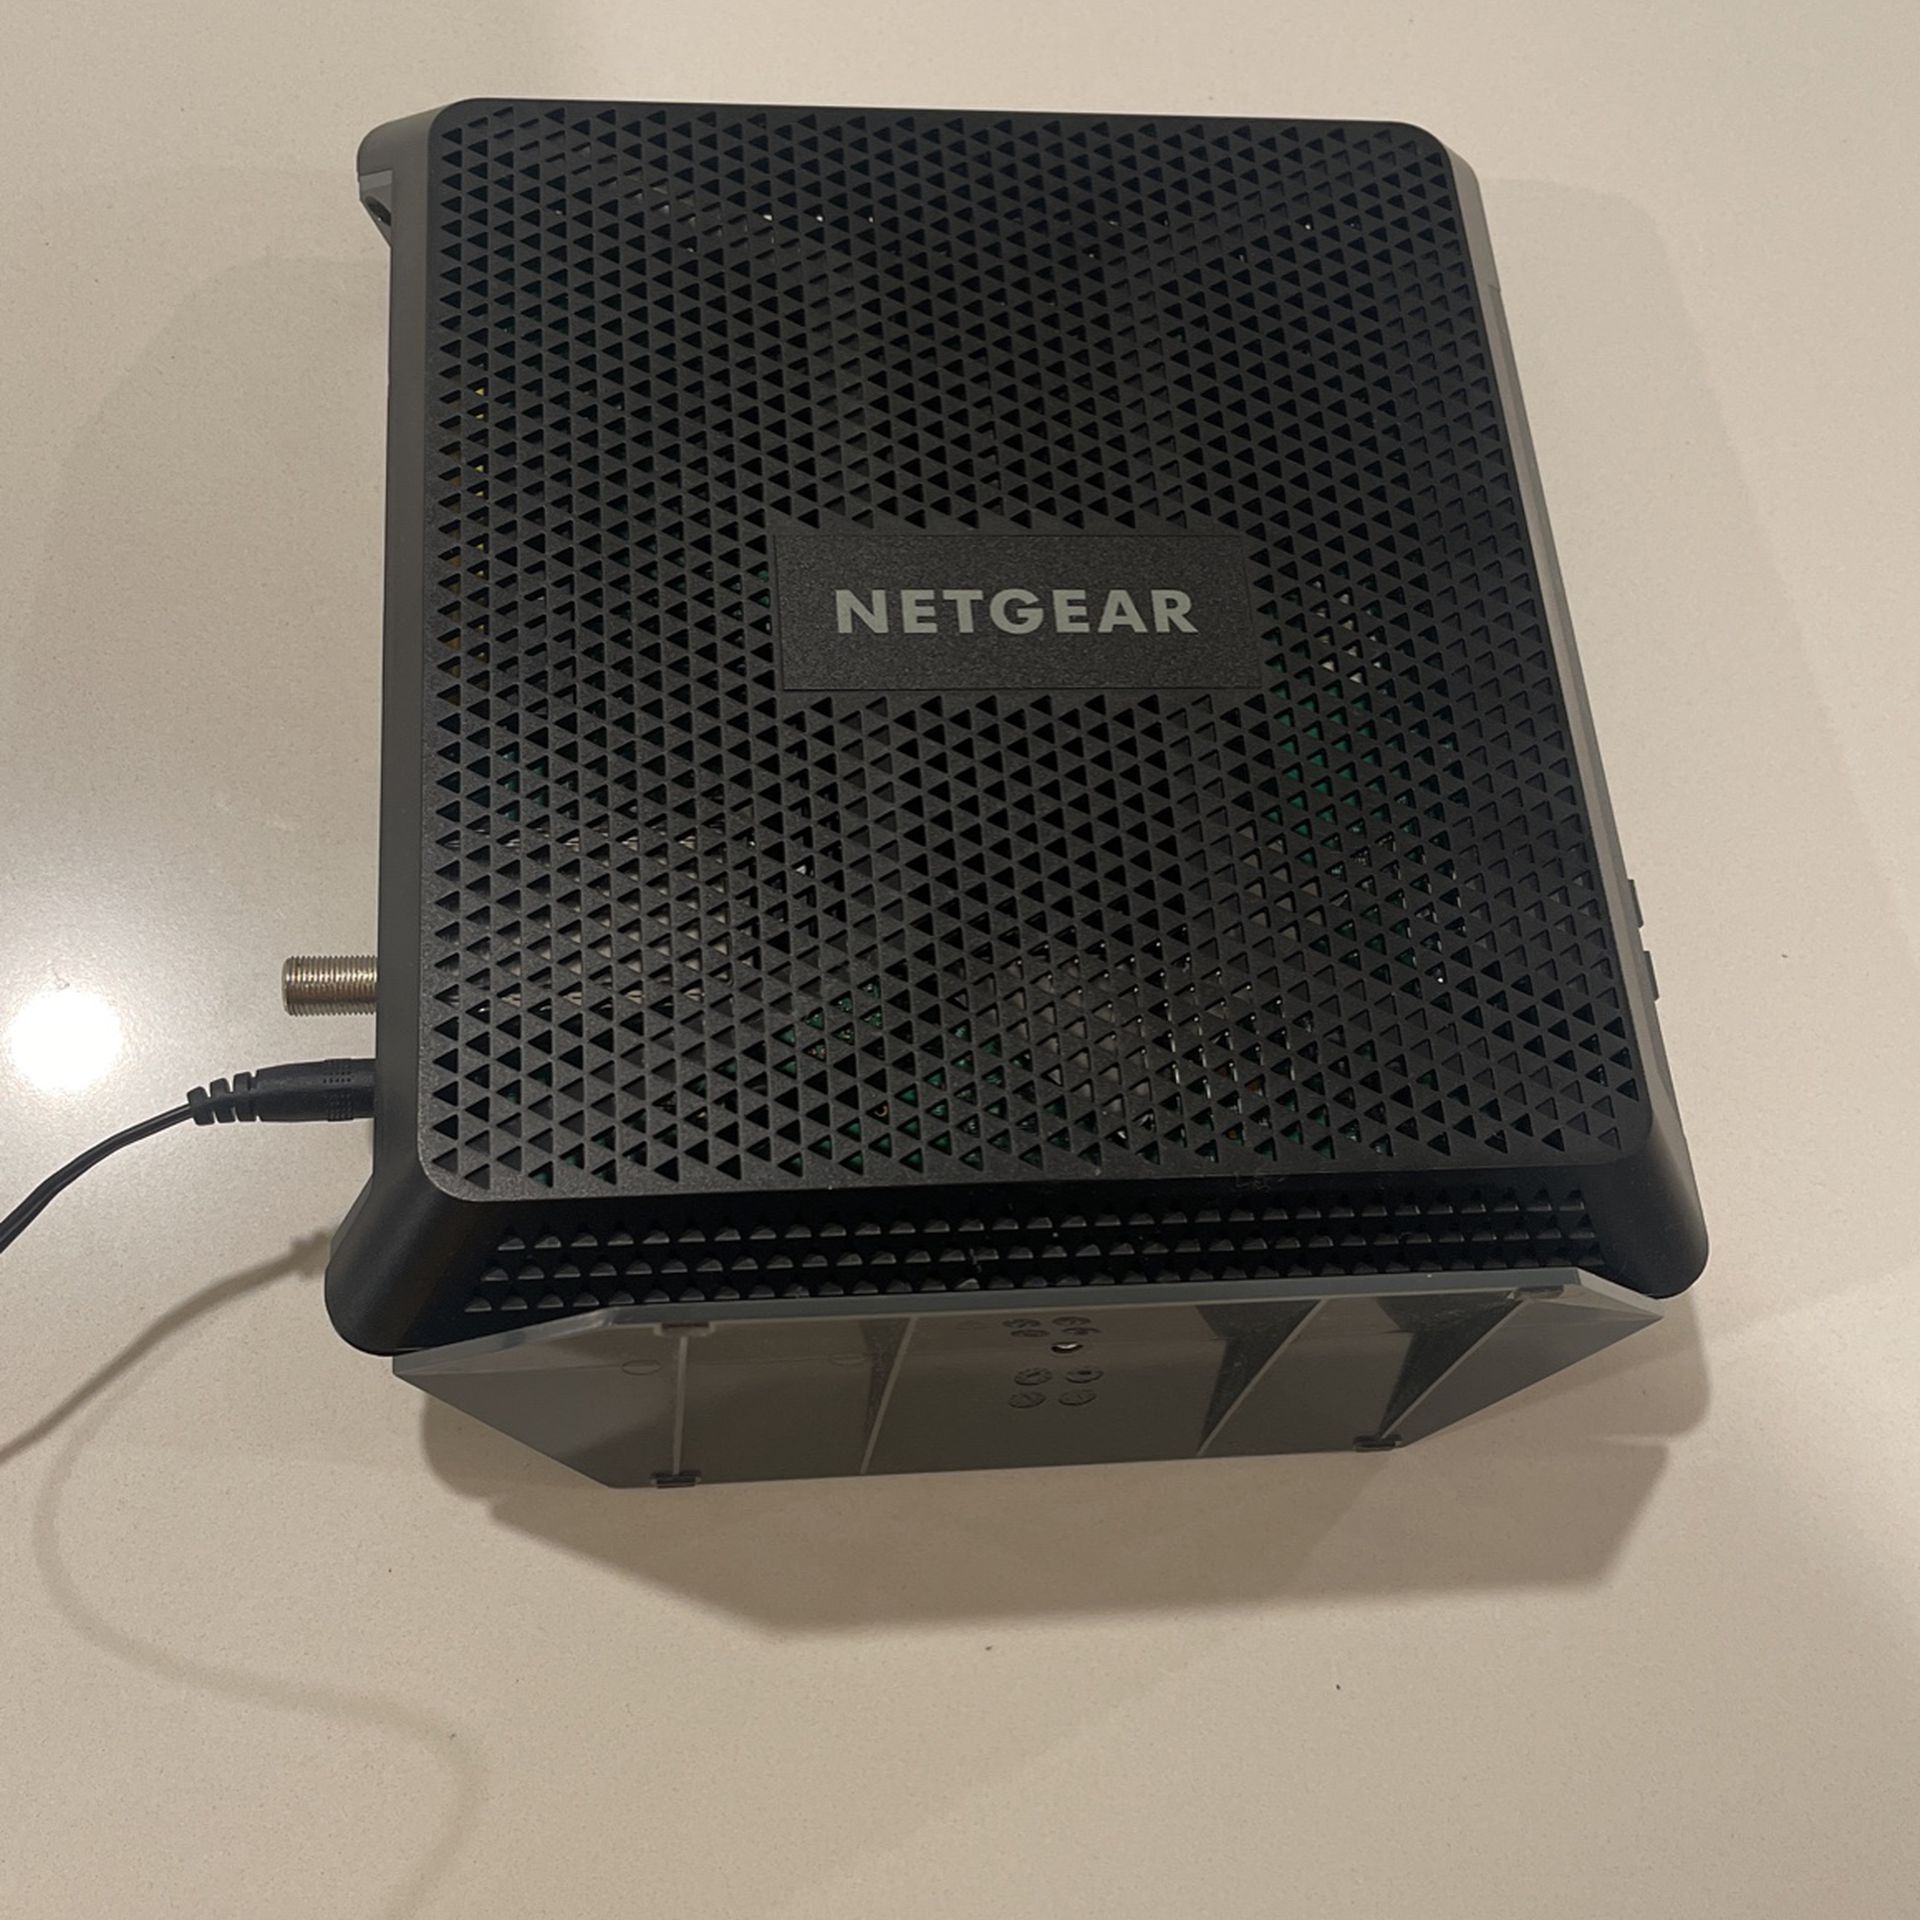 Netgear Wifi Cable Modem Router